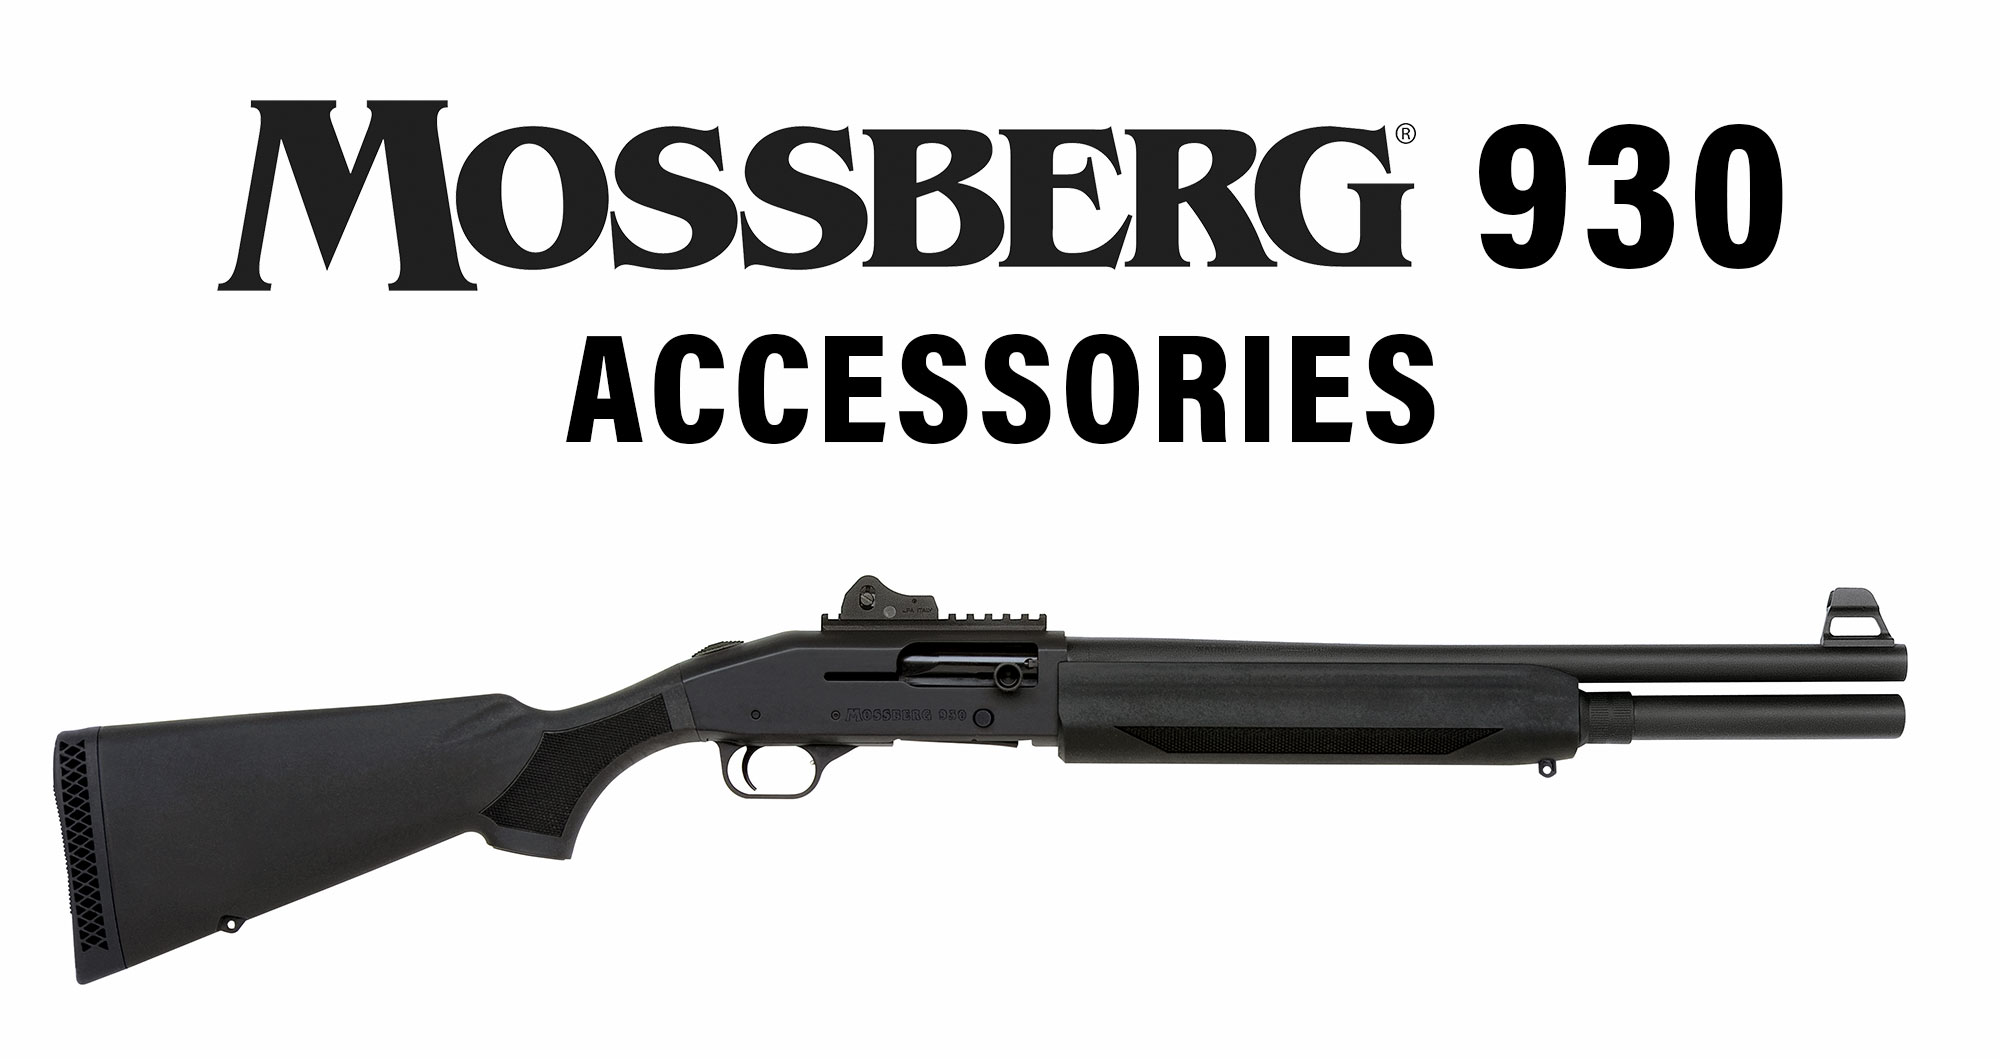 Mossberg 930 Accessories